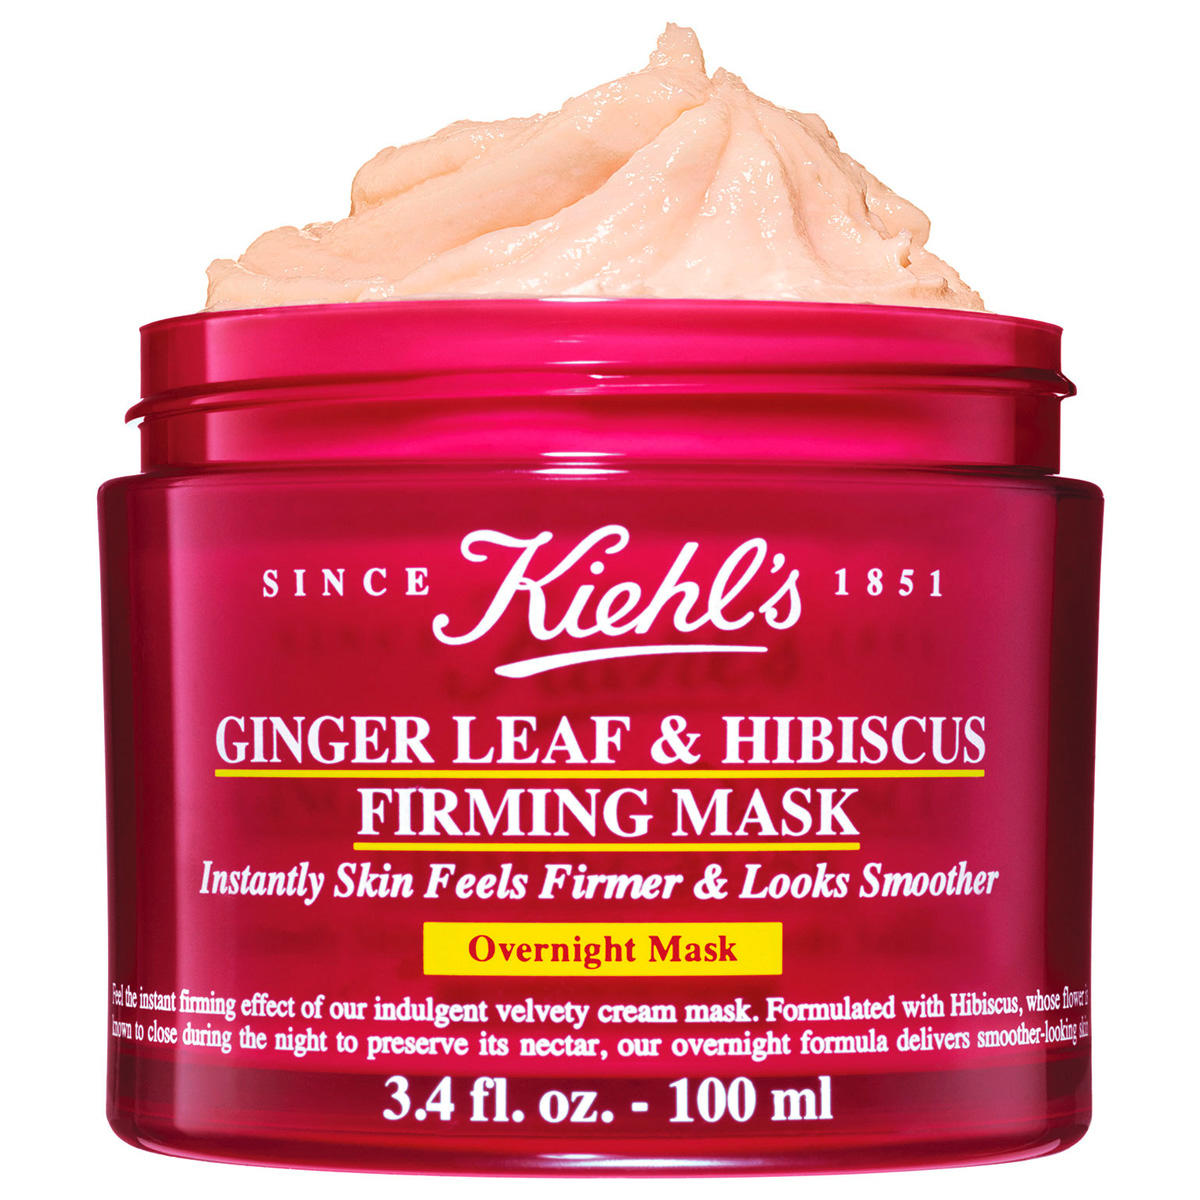 Kiehl's Ginger Leaf & Hibiscus Firming Mask 100 ml - 2